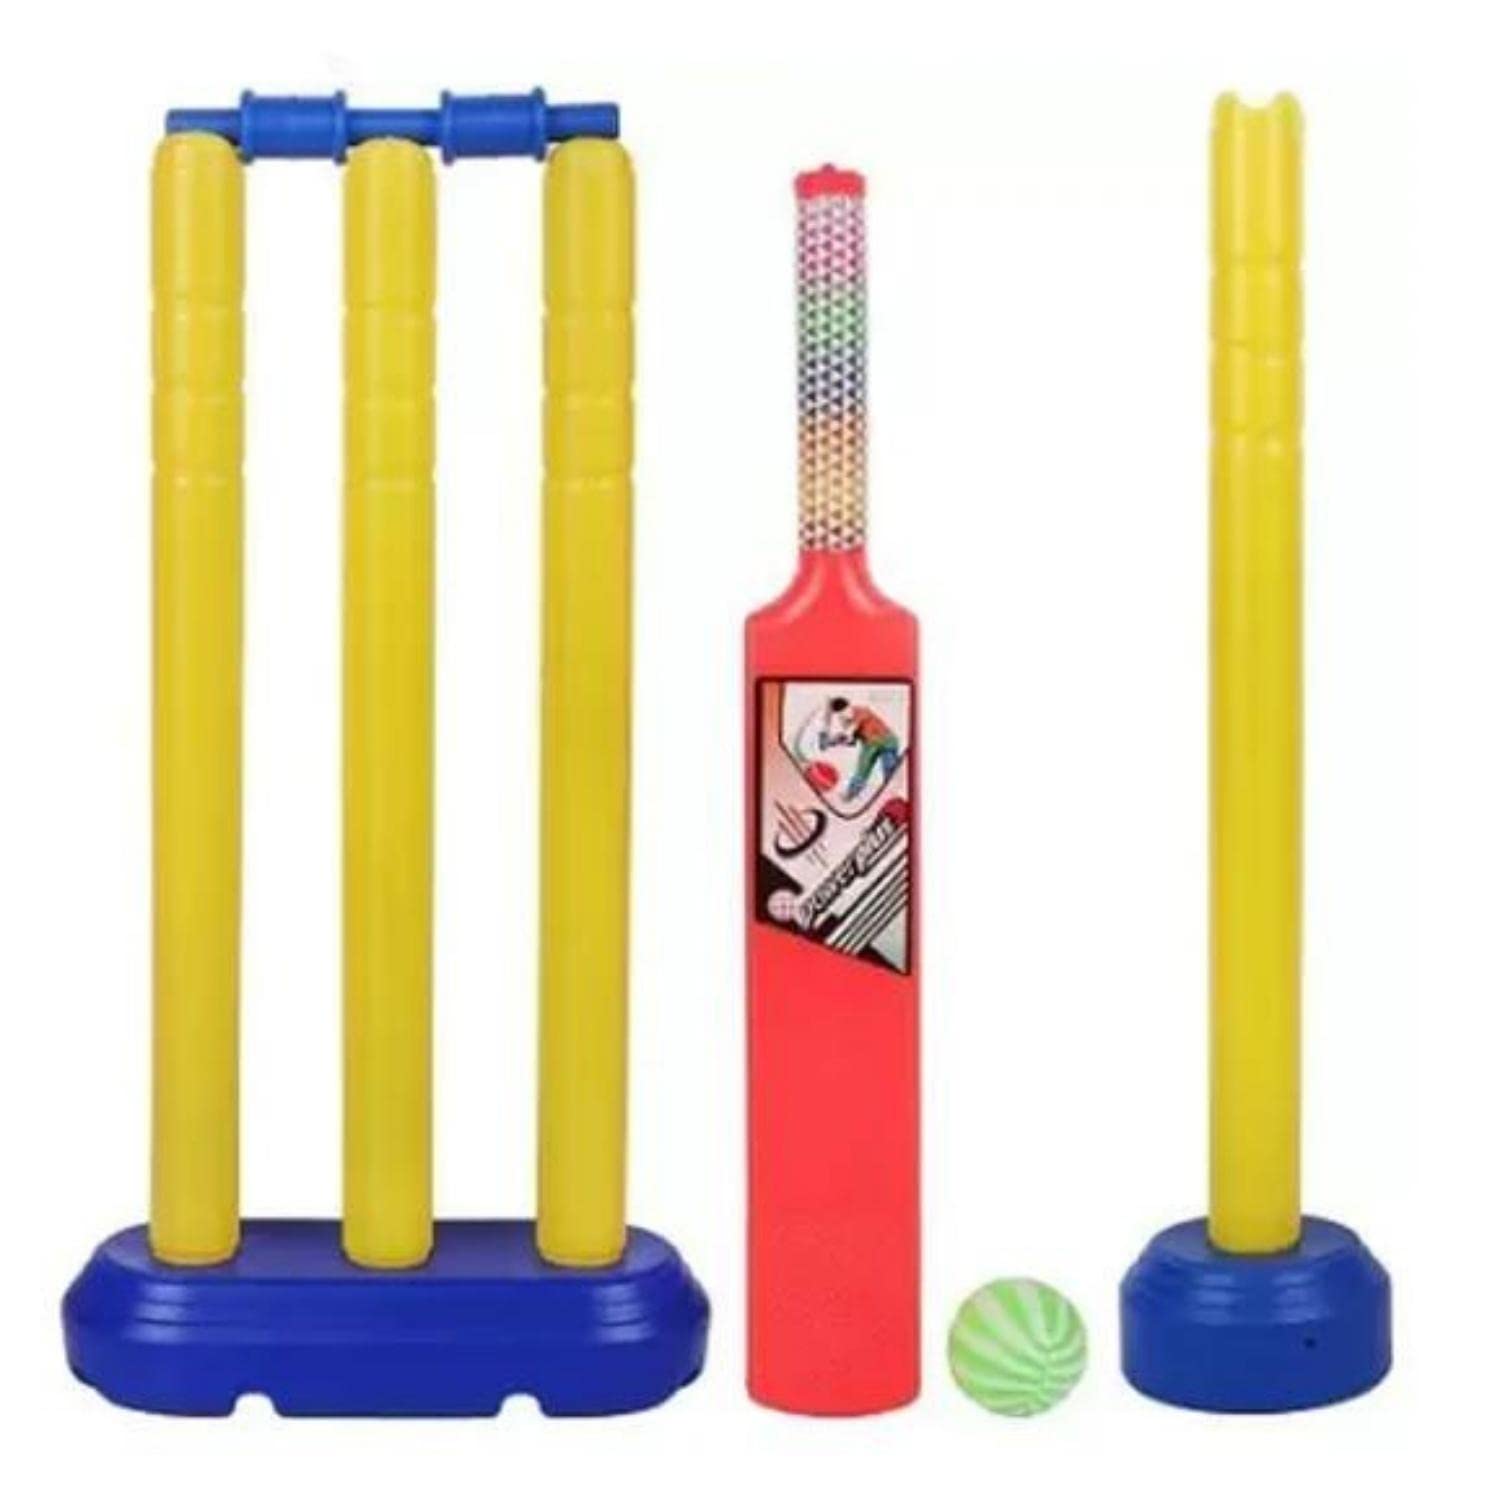 Kids Mandi plastic cricket bat set for parent-child sports game